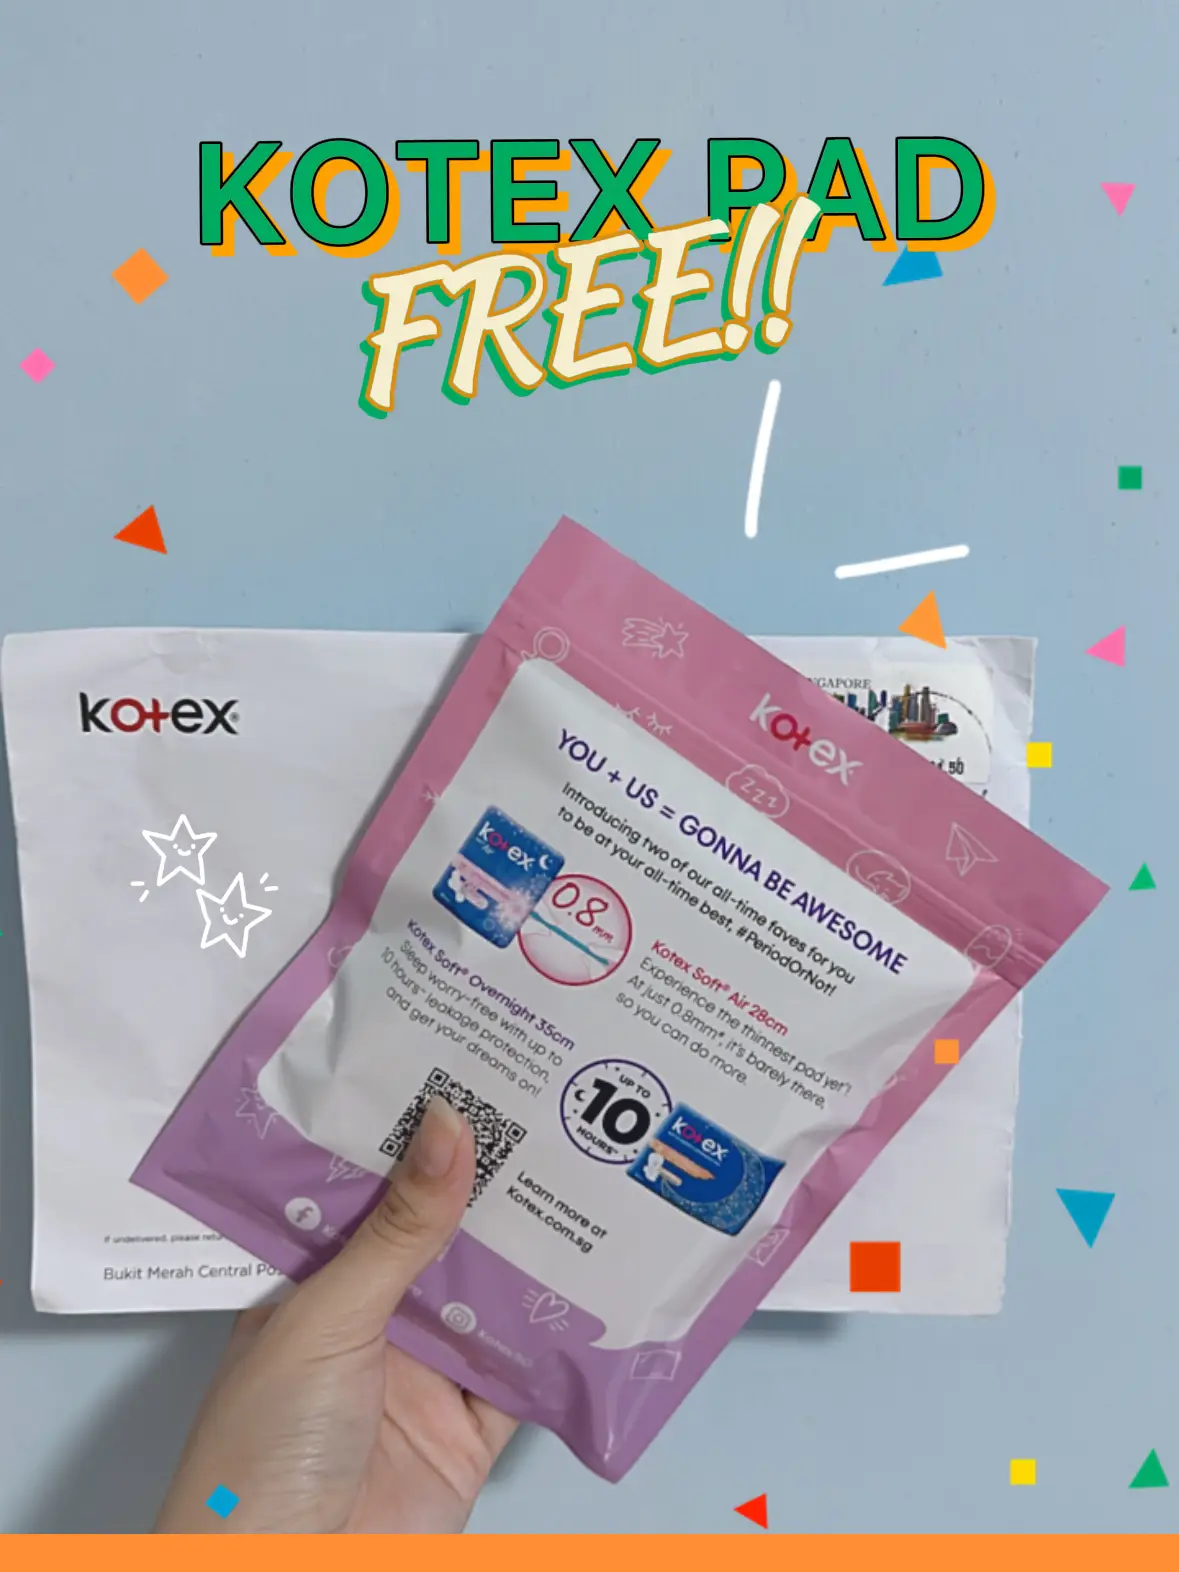 Kotex Malaysia - Did you know? Tight underwear can cause skin